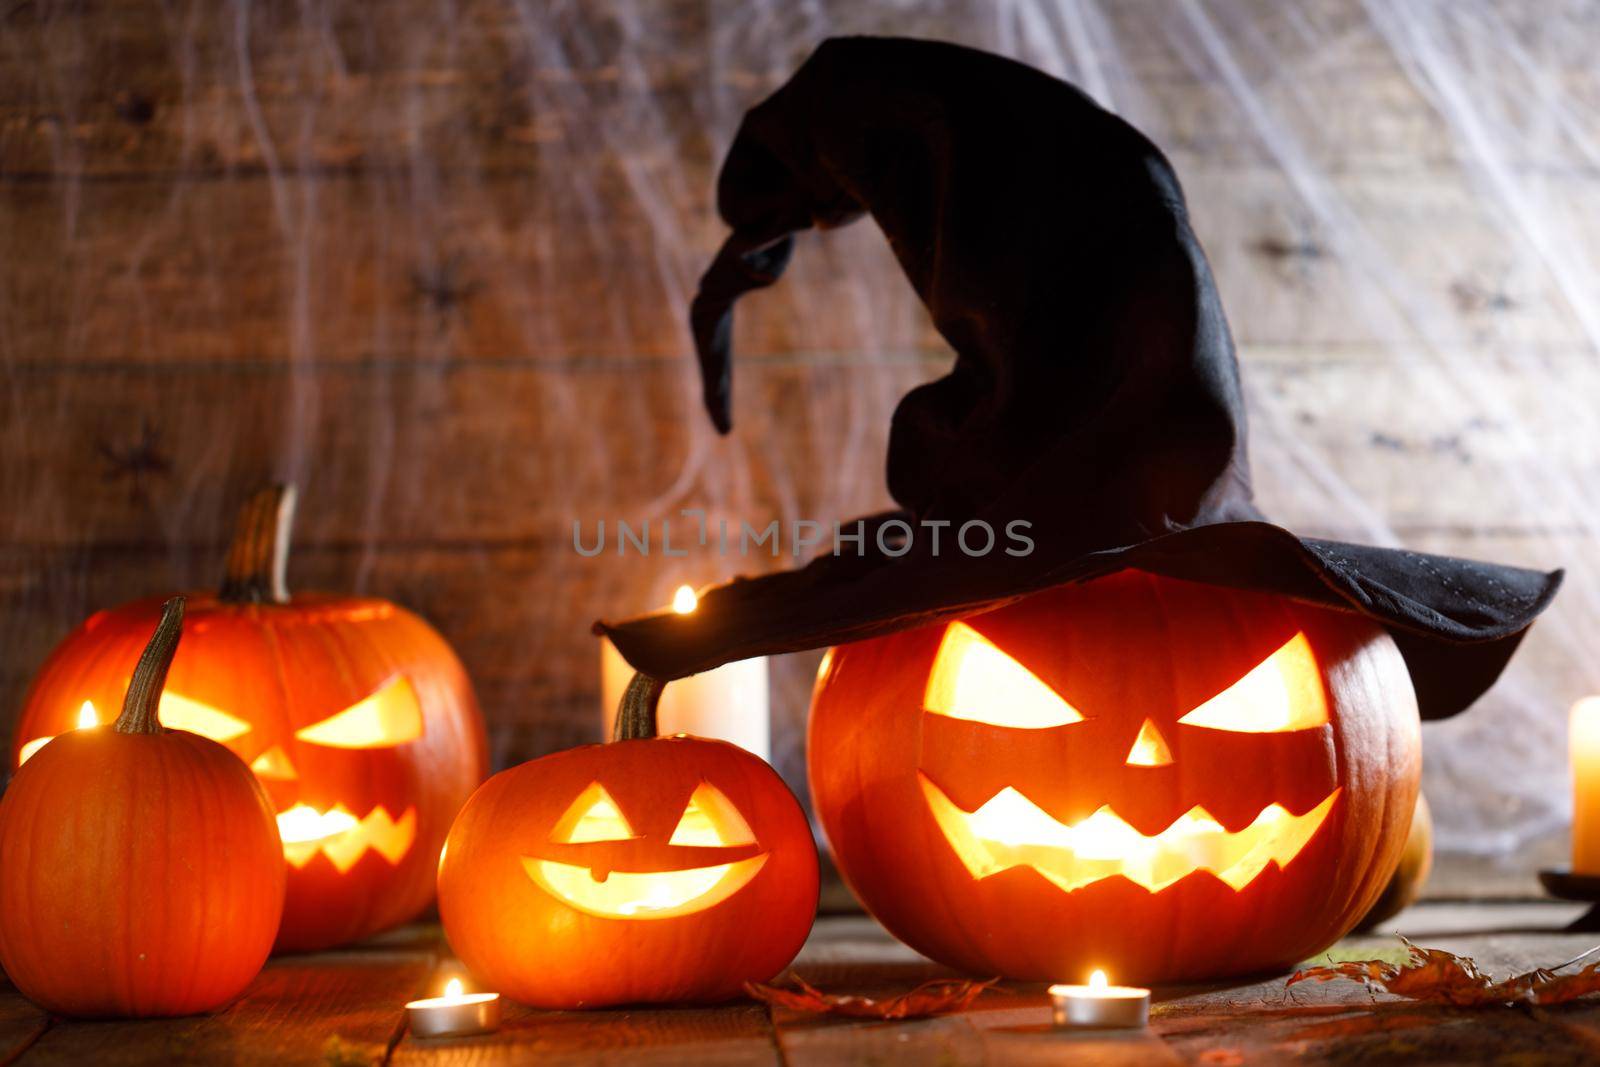 Festive mystical halloween pumpkins by Yellowj